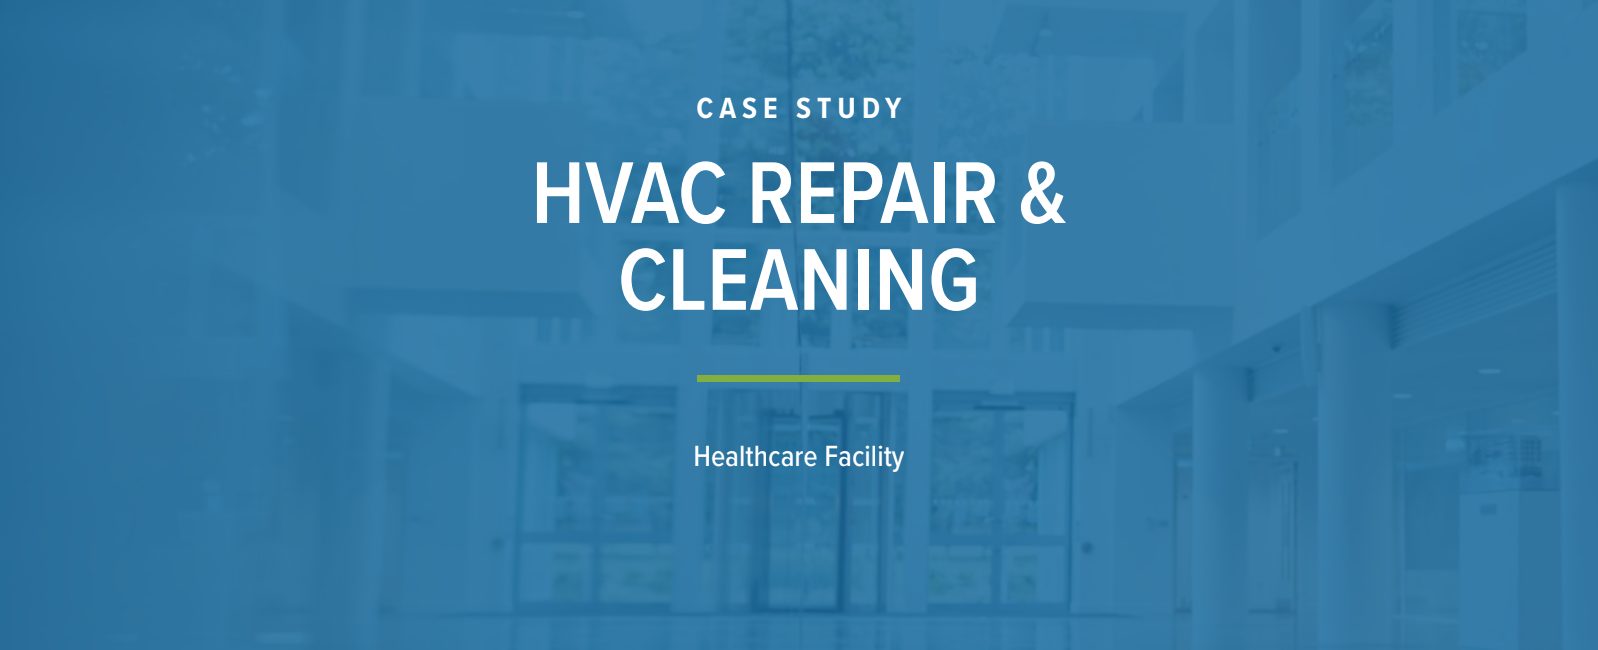 Case study: HVAC repair & cleaning